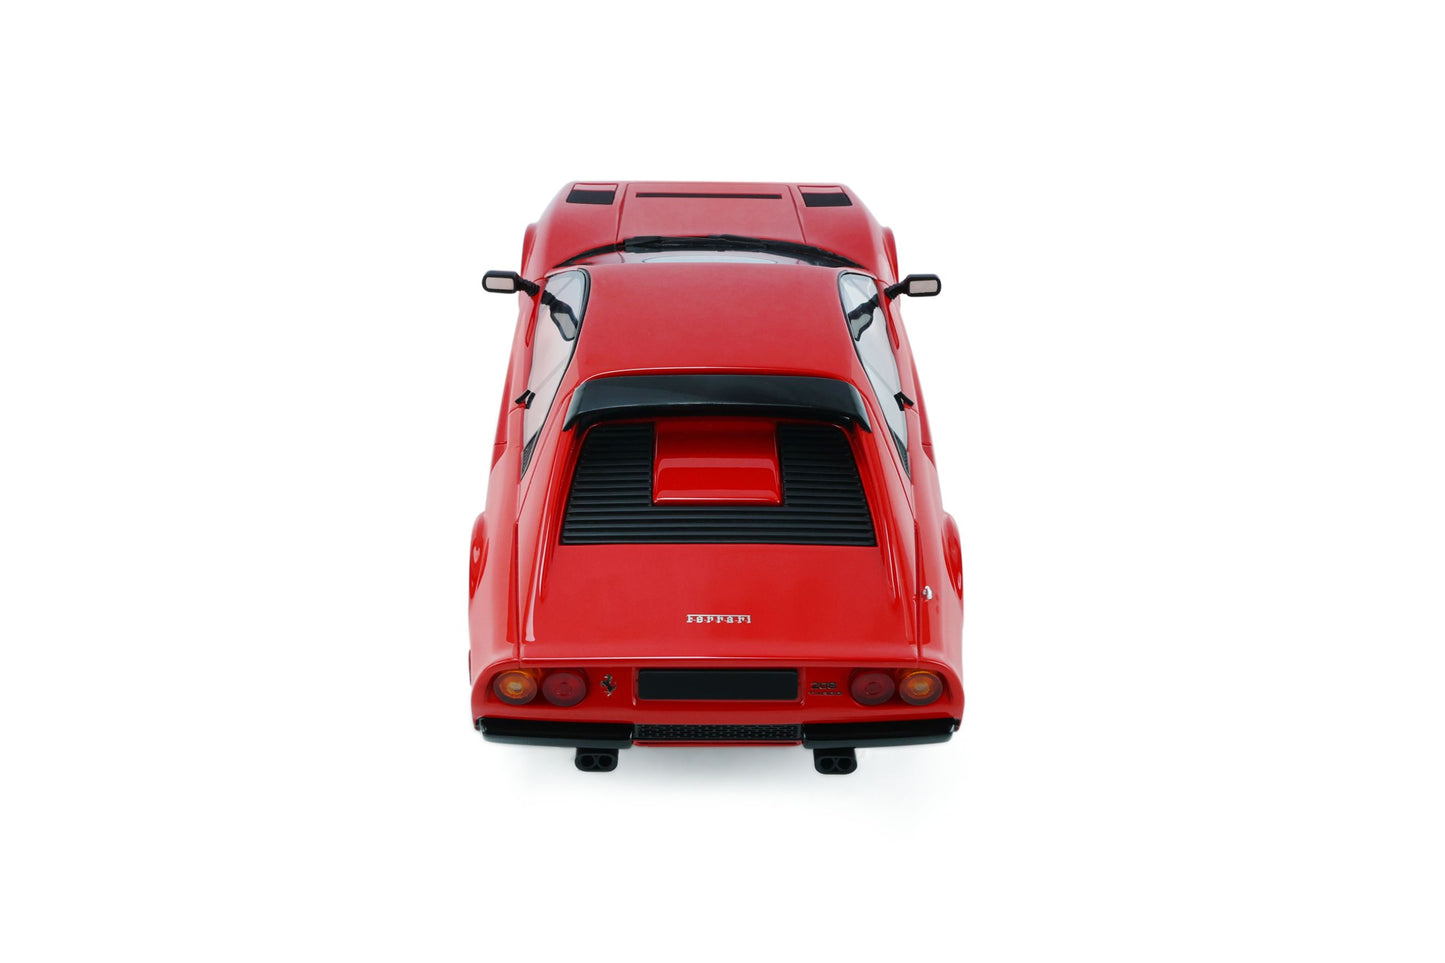 GT Spirit - Ferrari 208 GTB Turbo (Rosso Corsa Red) 1:18 Scale Model Car